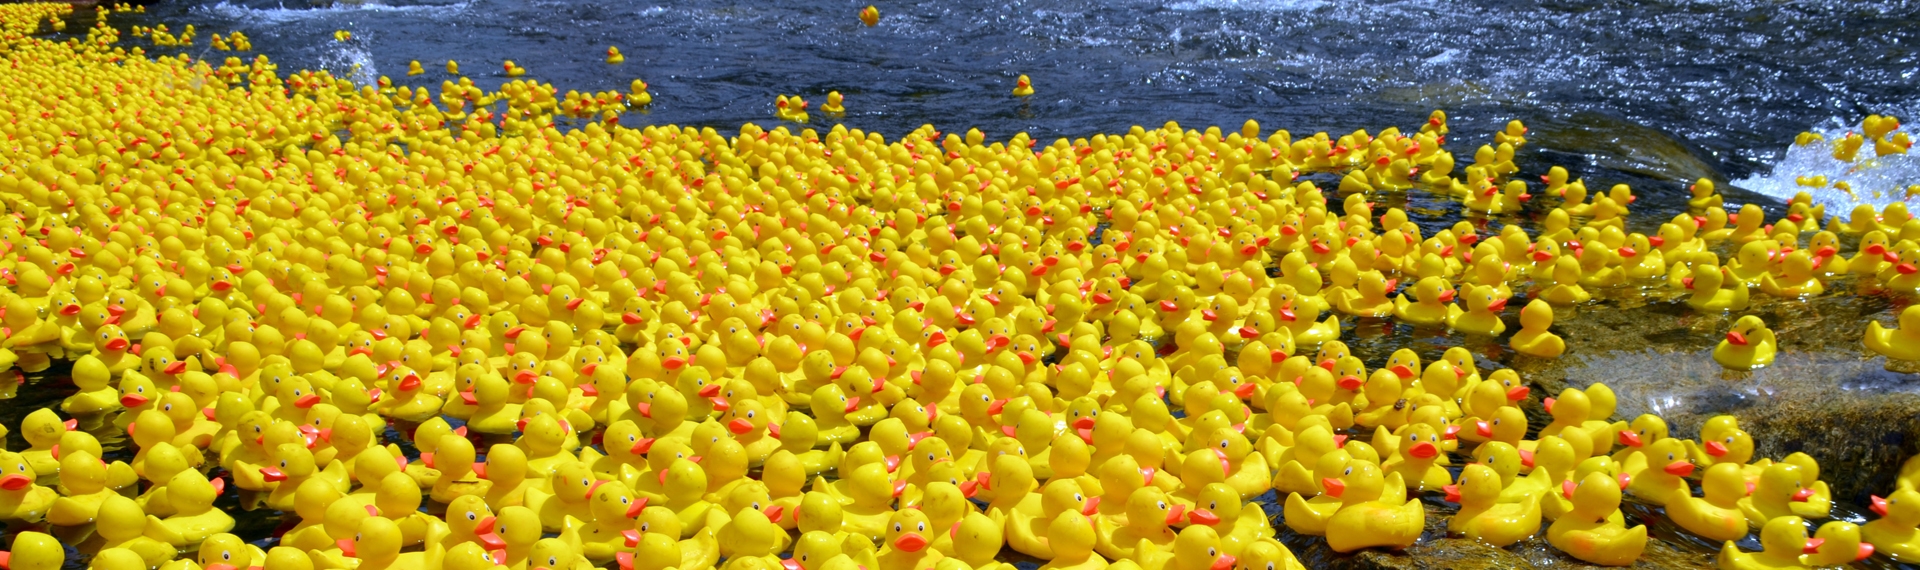 rubber duckies in water